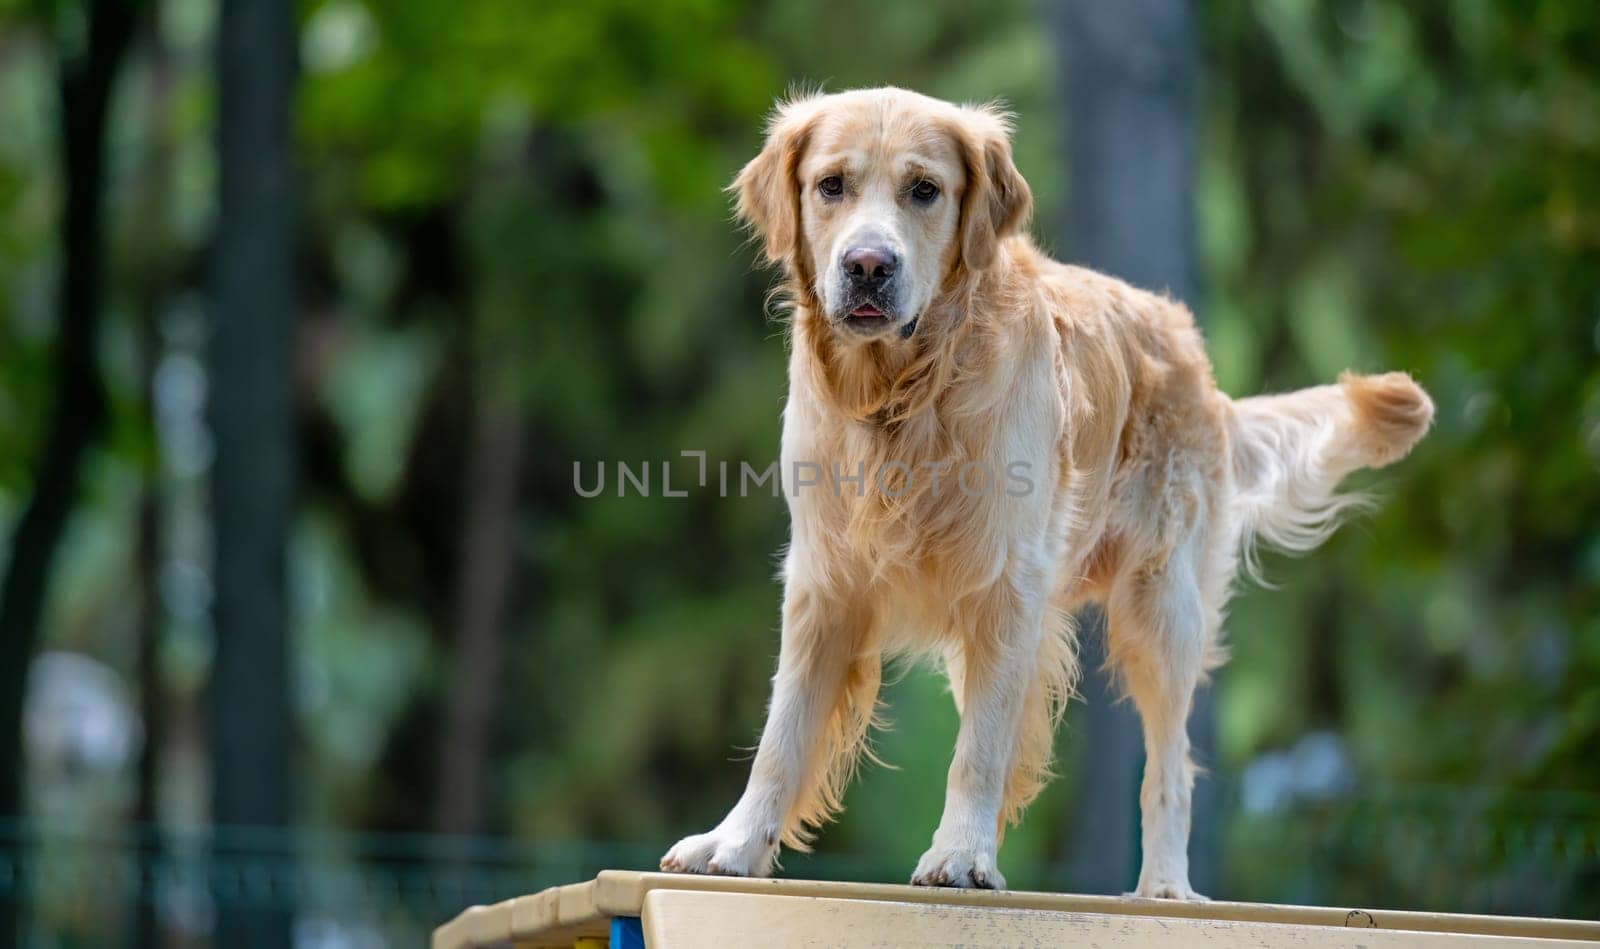 Golden retriever dog training by GekaSkr